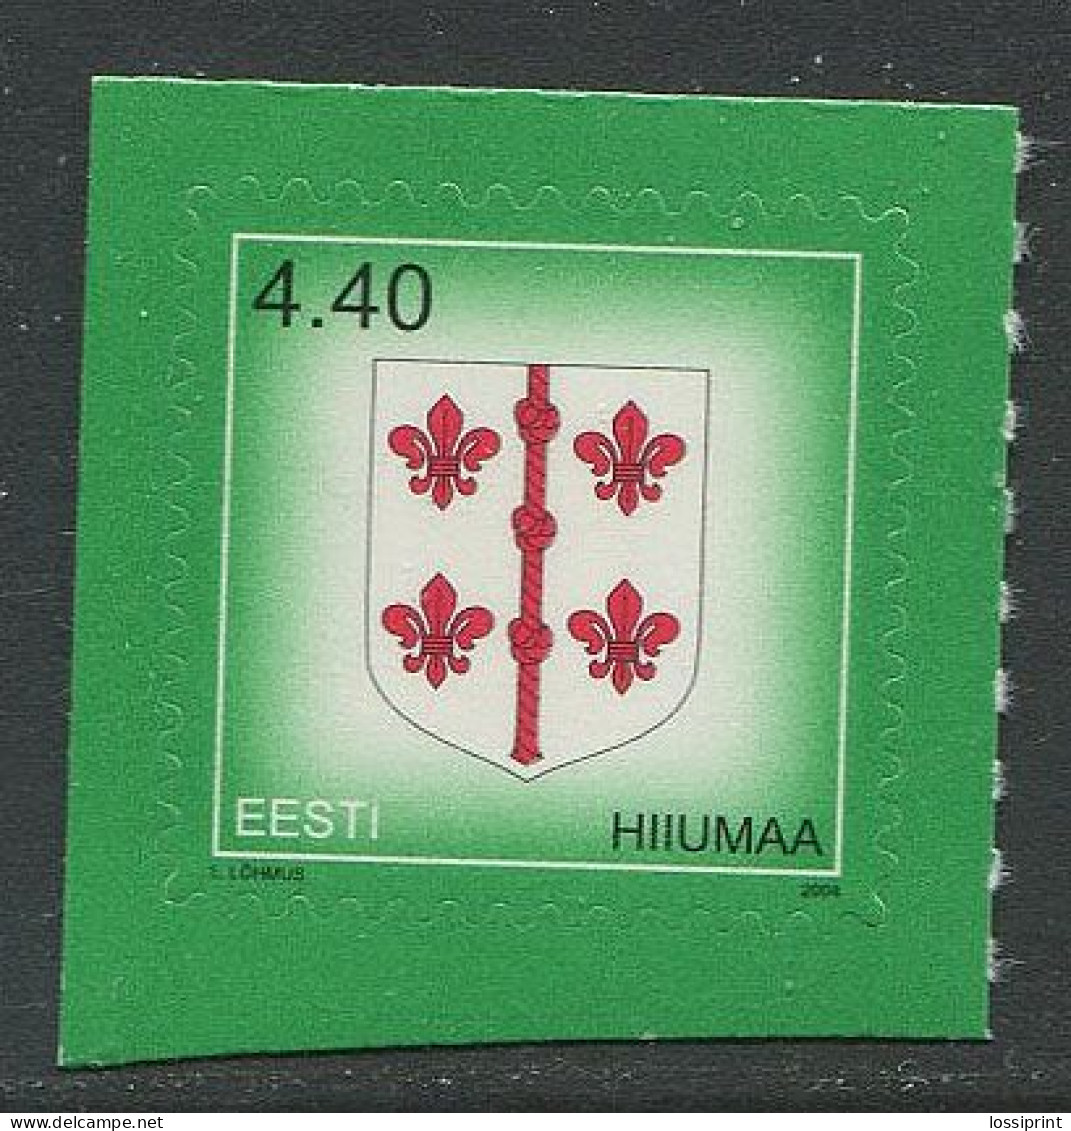 Estonia:Unused Stamp Hiiumaa Coat Of Arm, 2004, MNH - Estonia